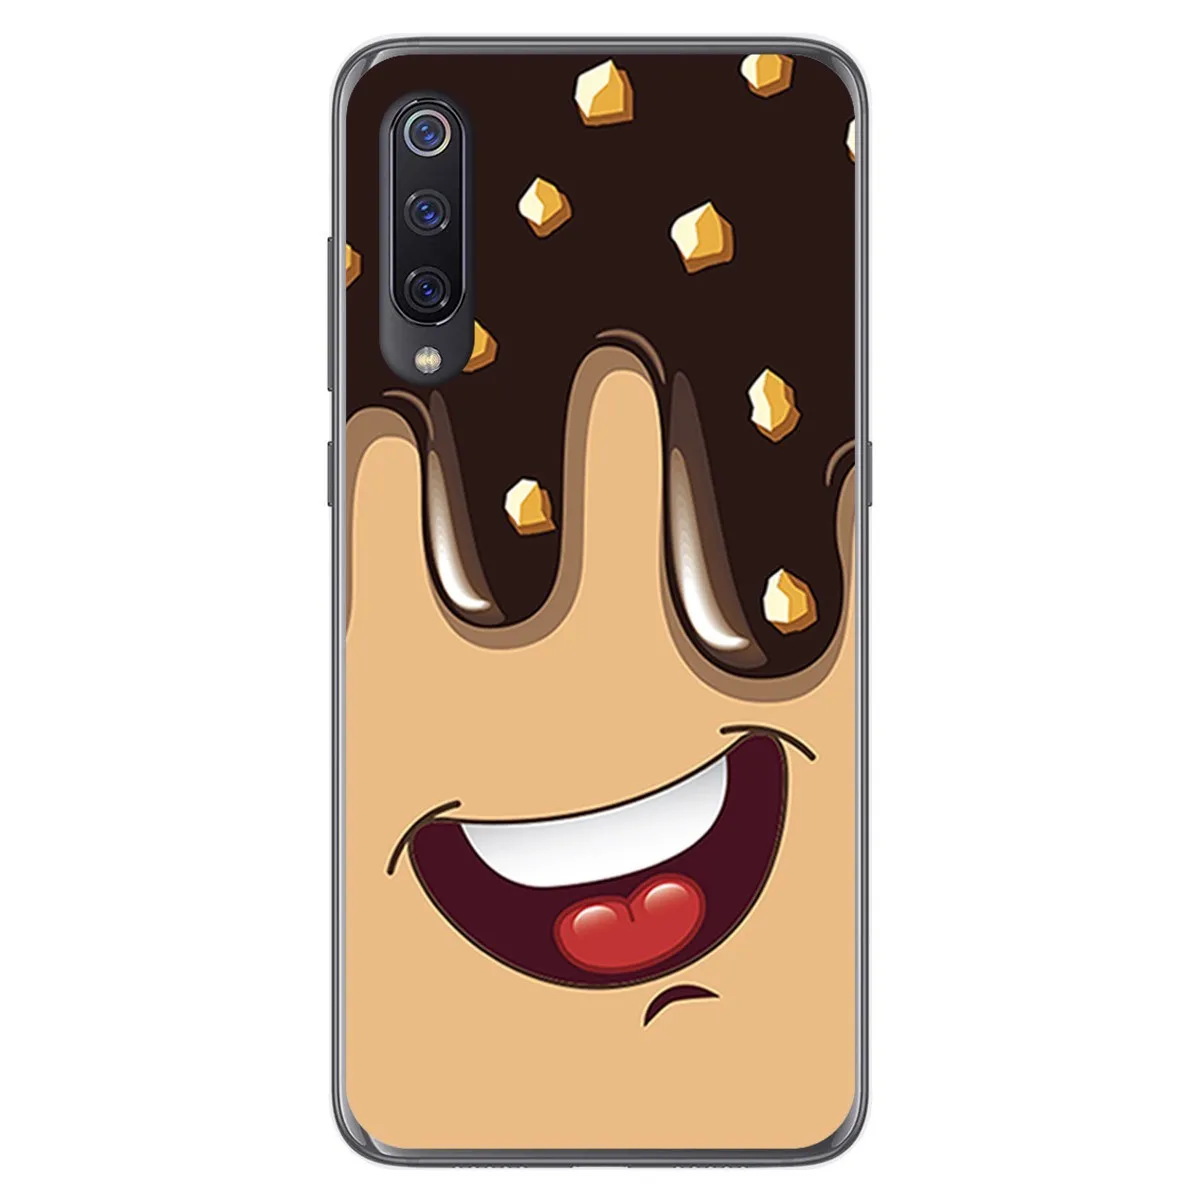 Funda Gel Tpu para Xiaomi Mi 9 diseño Helado Chocolate Dibujos